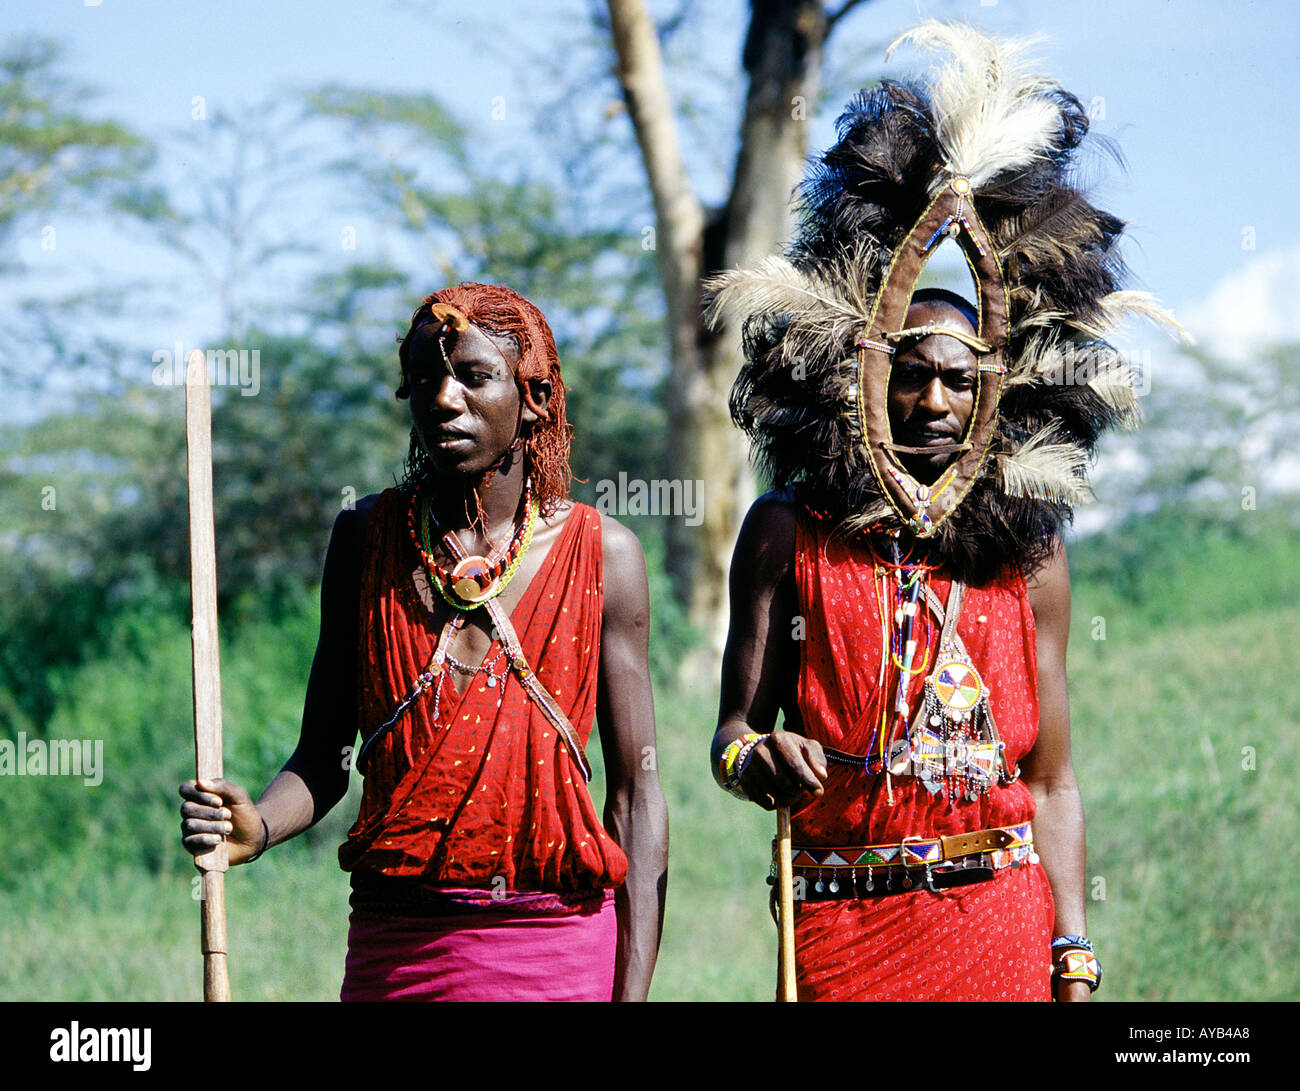 Masai Warrior and woman Africa kenya tribe mask Stock Photo